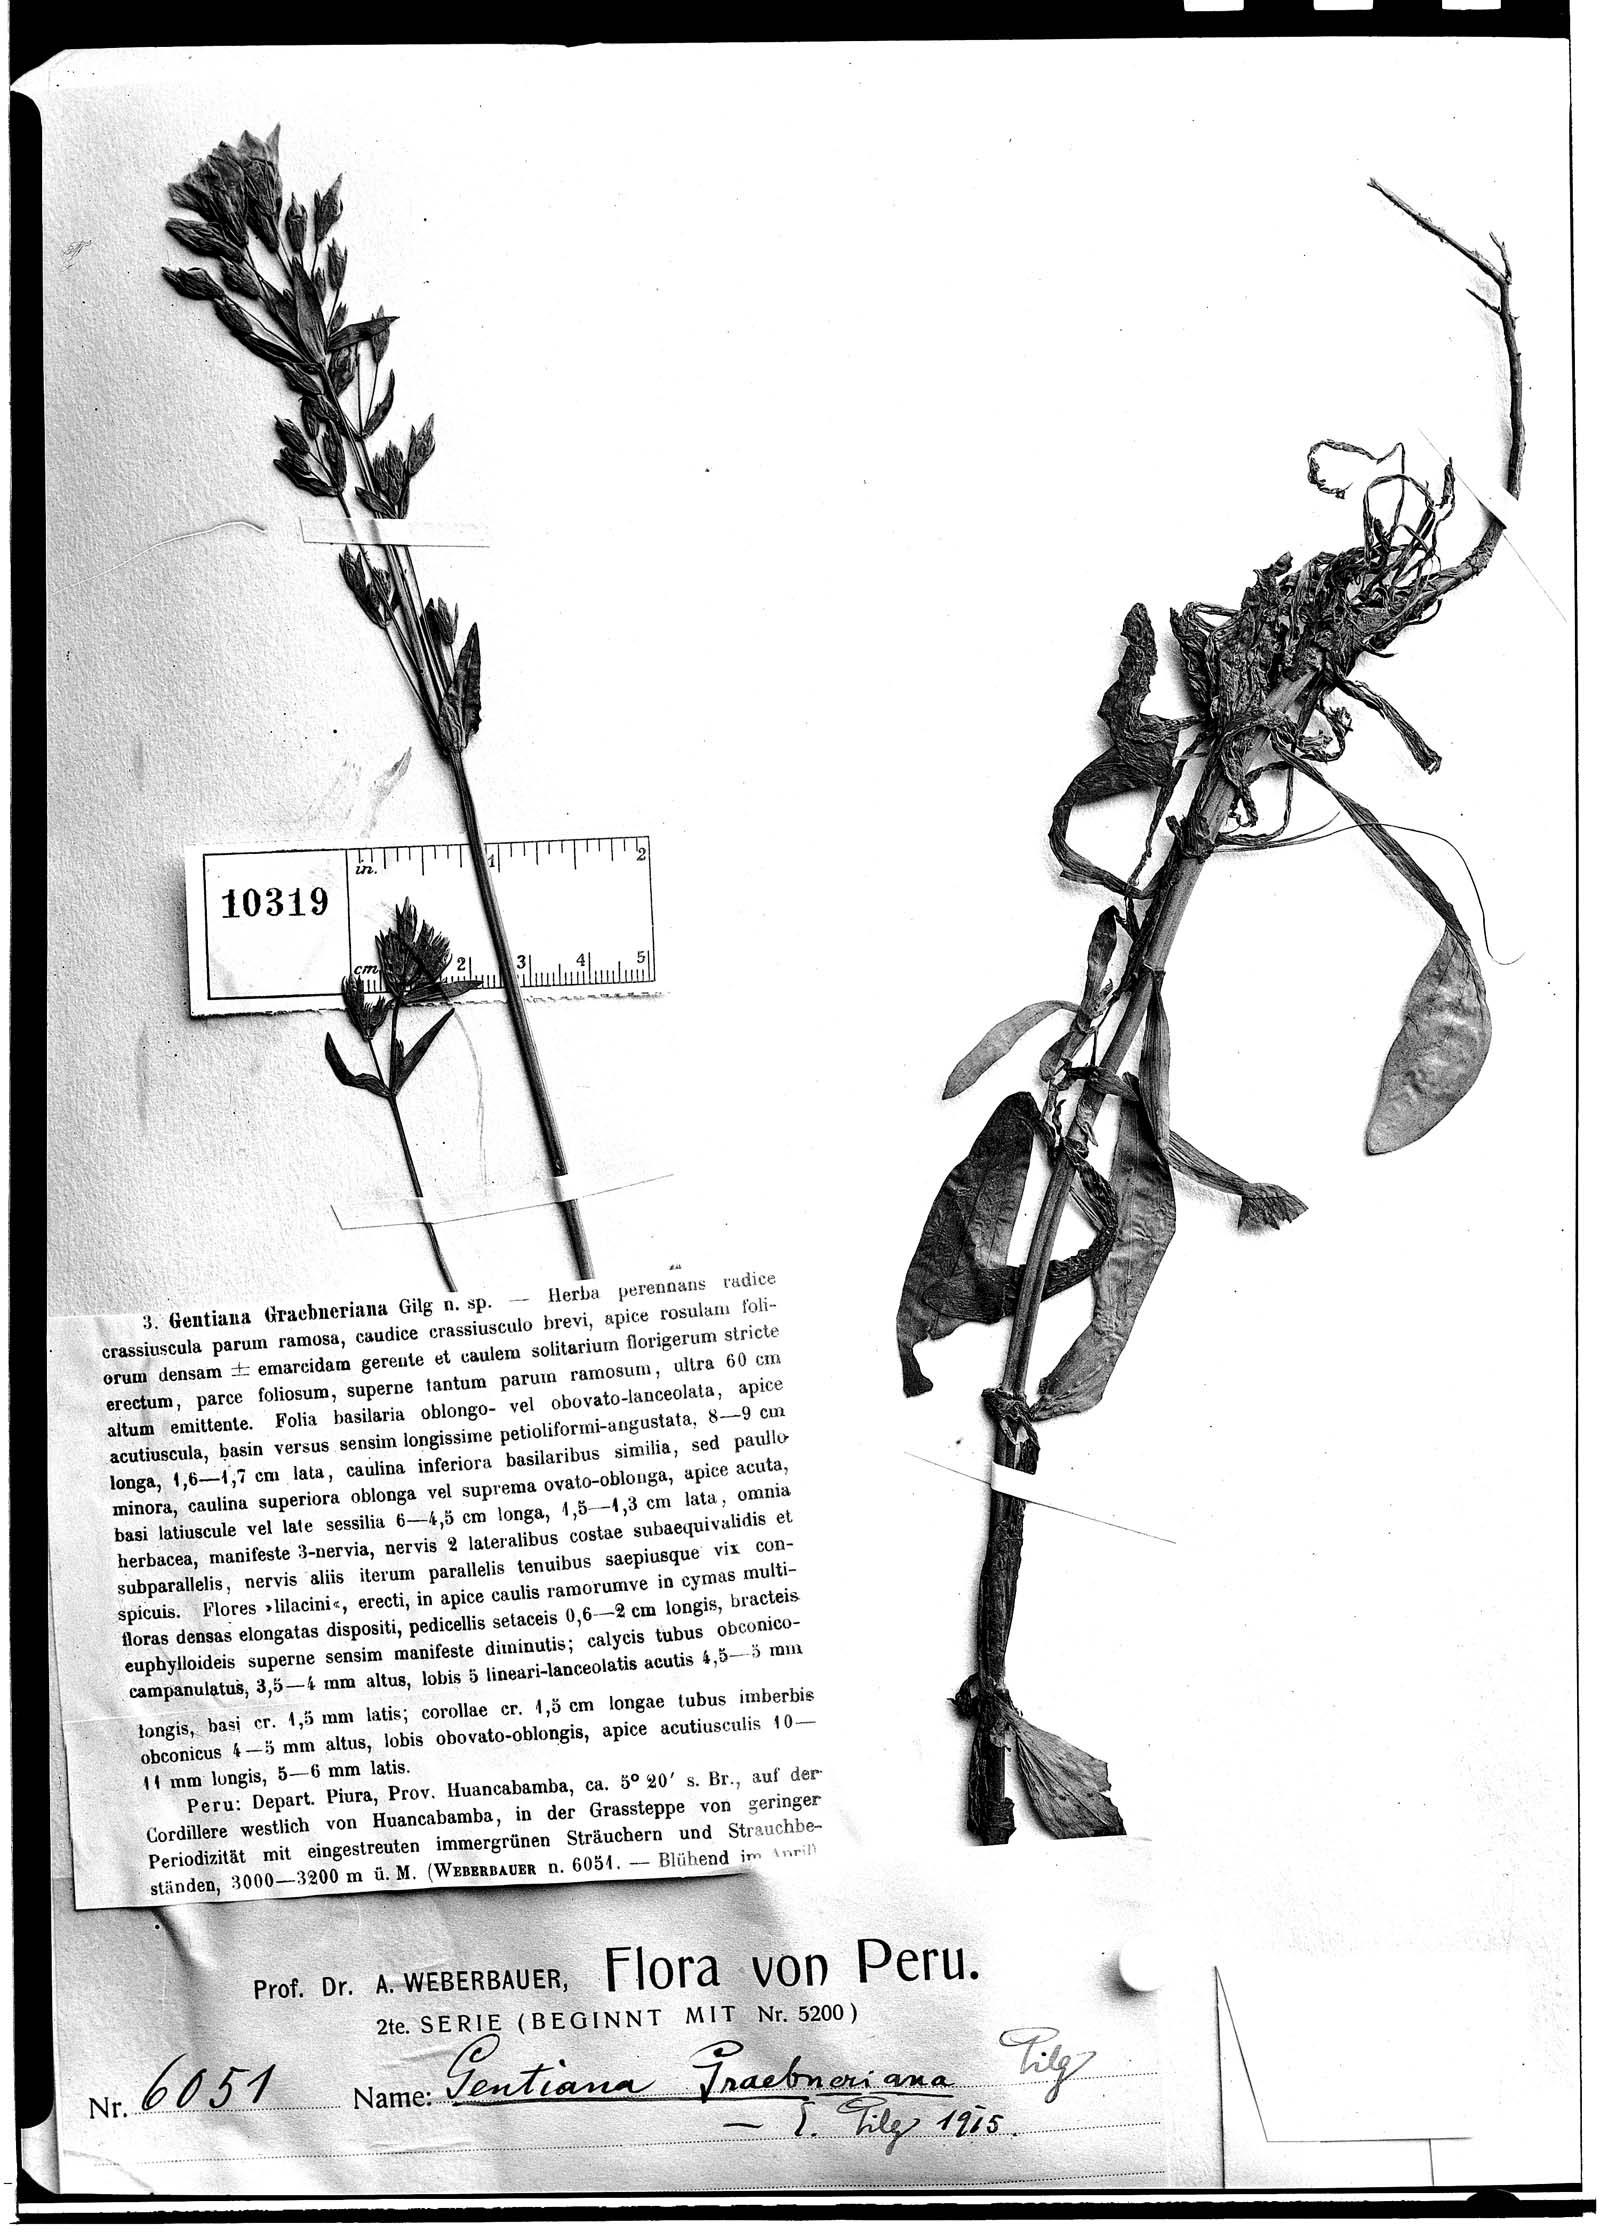 Gentianella liniflora image